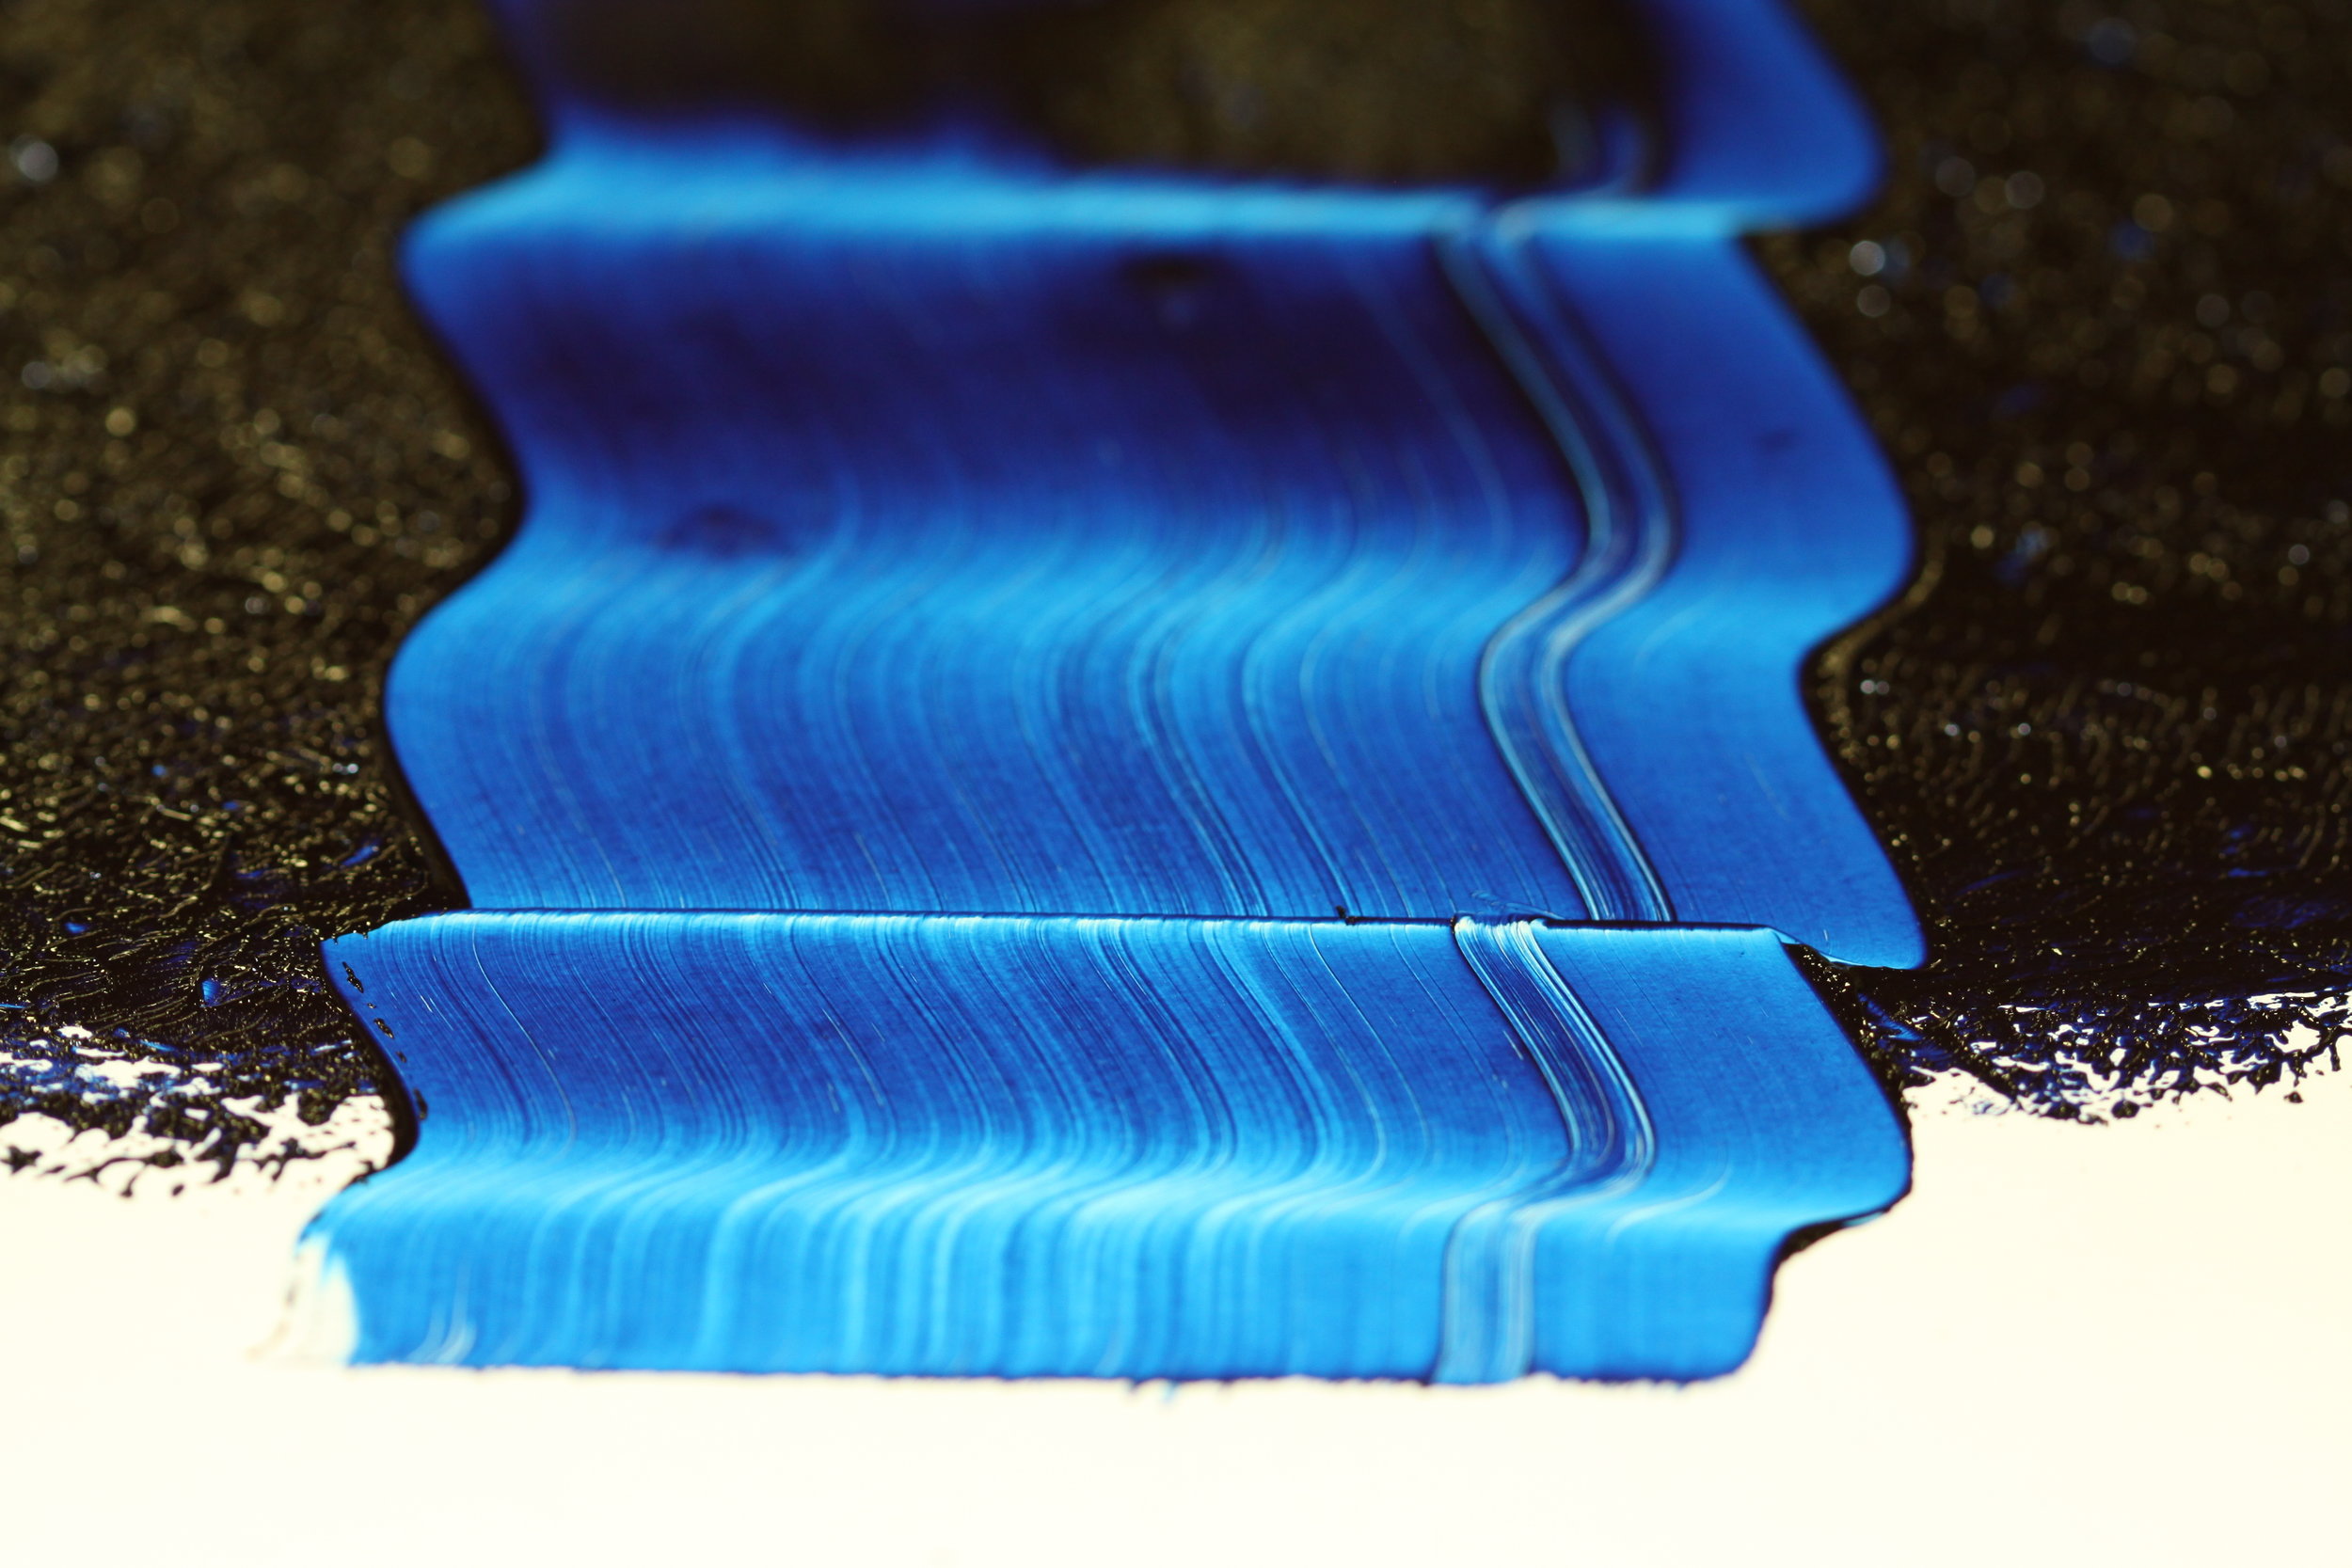  R&F Handmade Paints 262M Oil Pigment Stick 100ml Ultramarine  Blue Pale